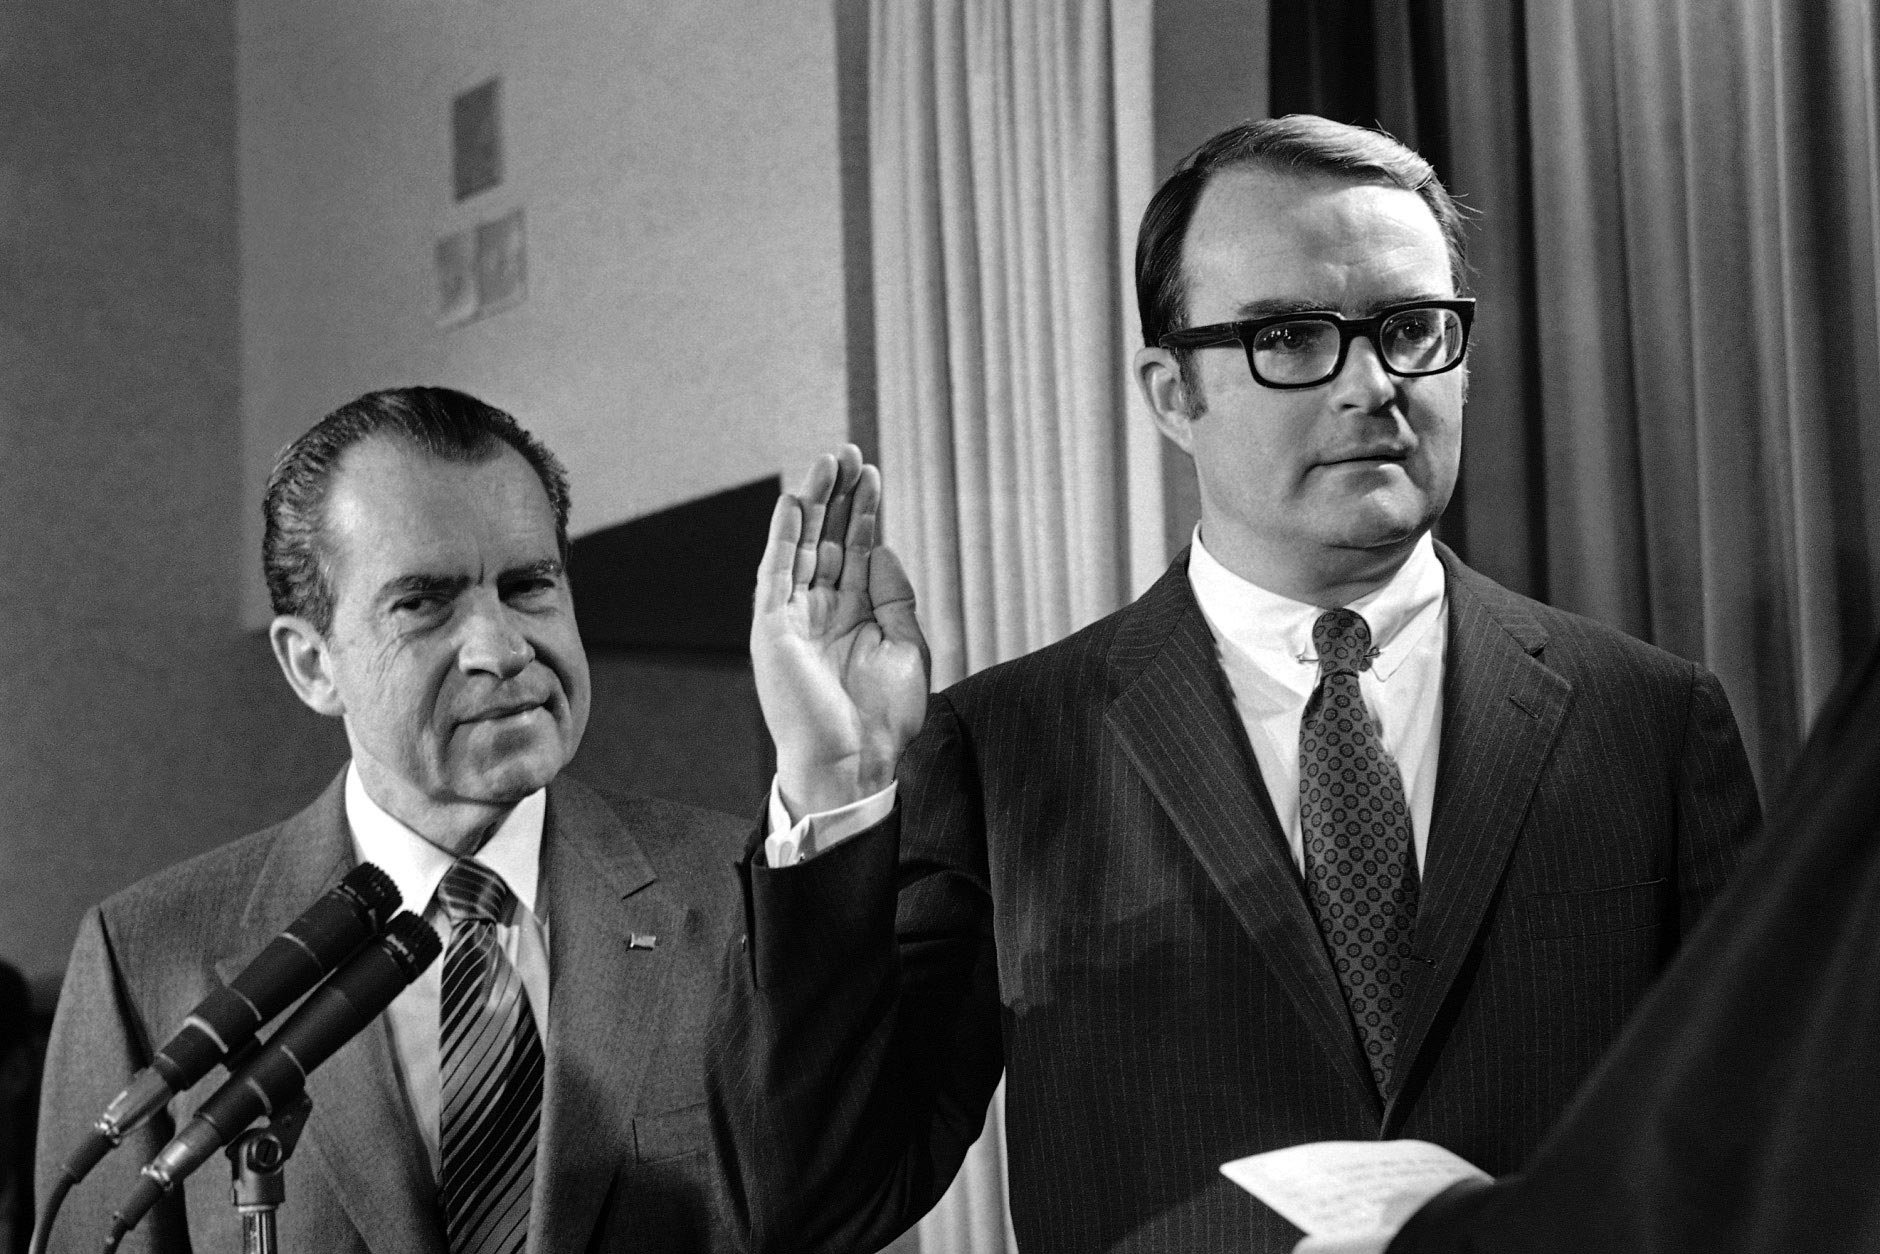 Photo of the first U.S. EPA administrator, Ruckelshaus, being sworn in alongside President Nixon.